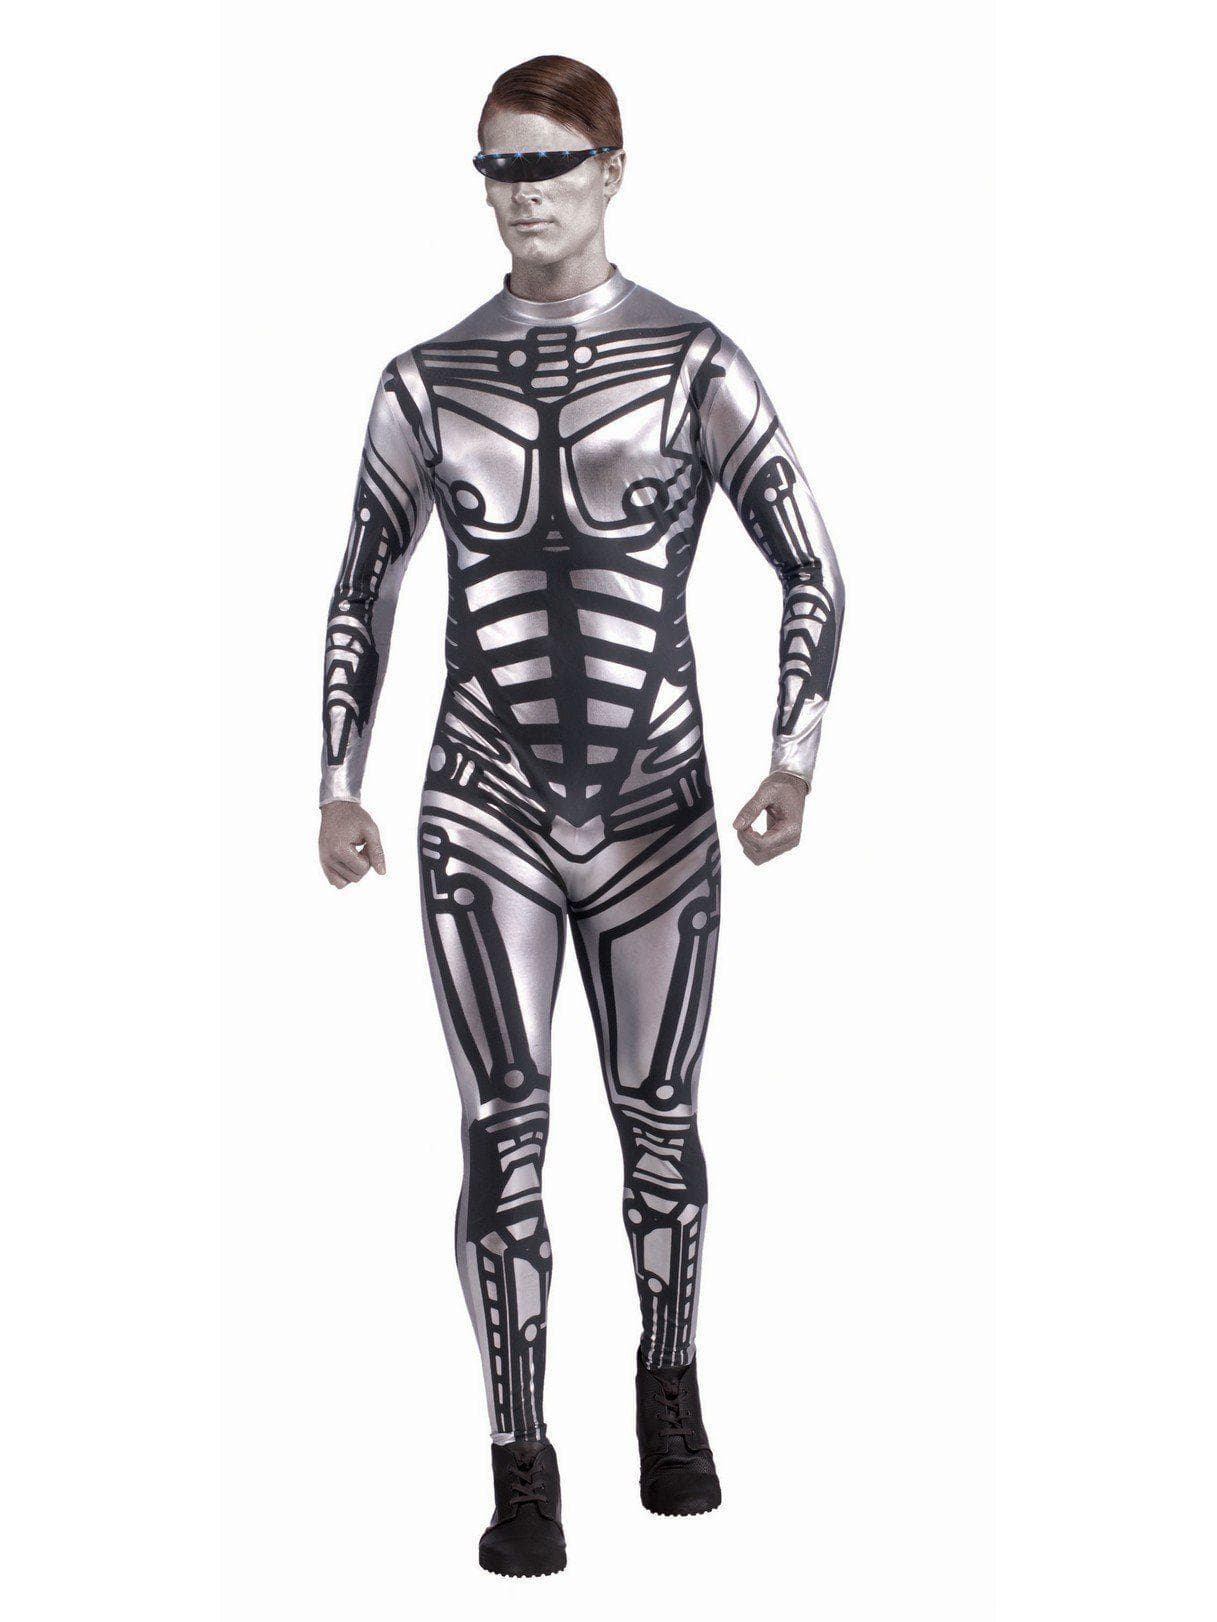 Adult Robot Male Costume - costumes.com